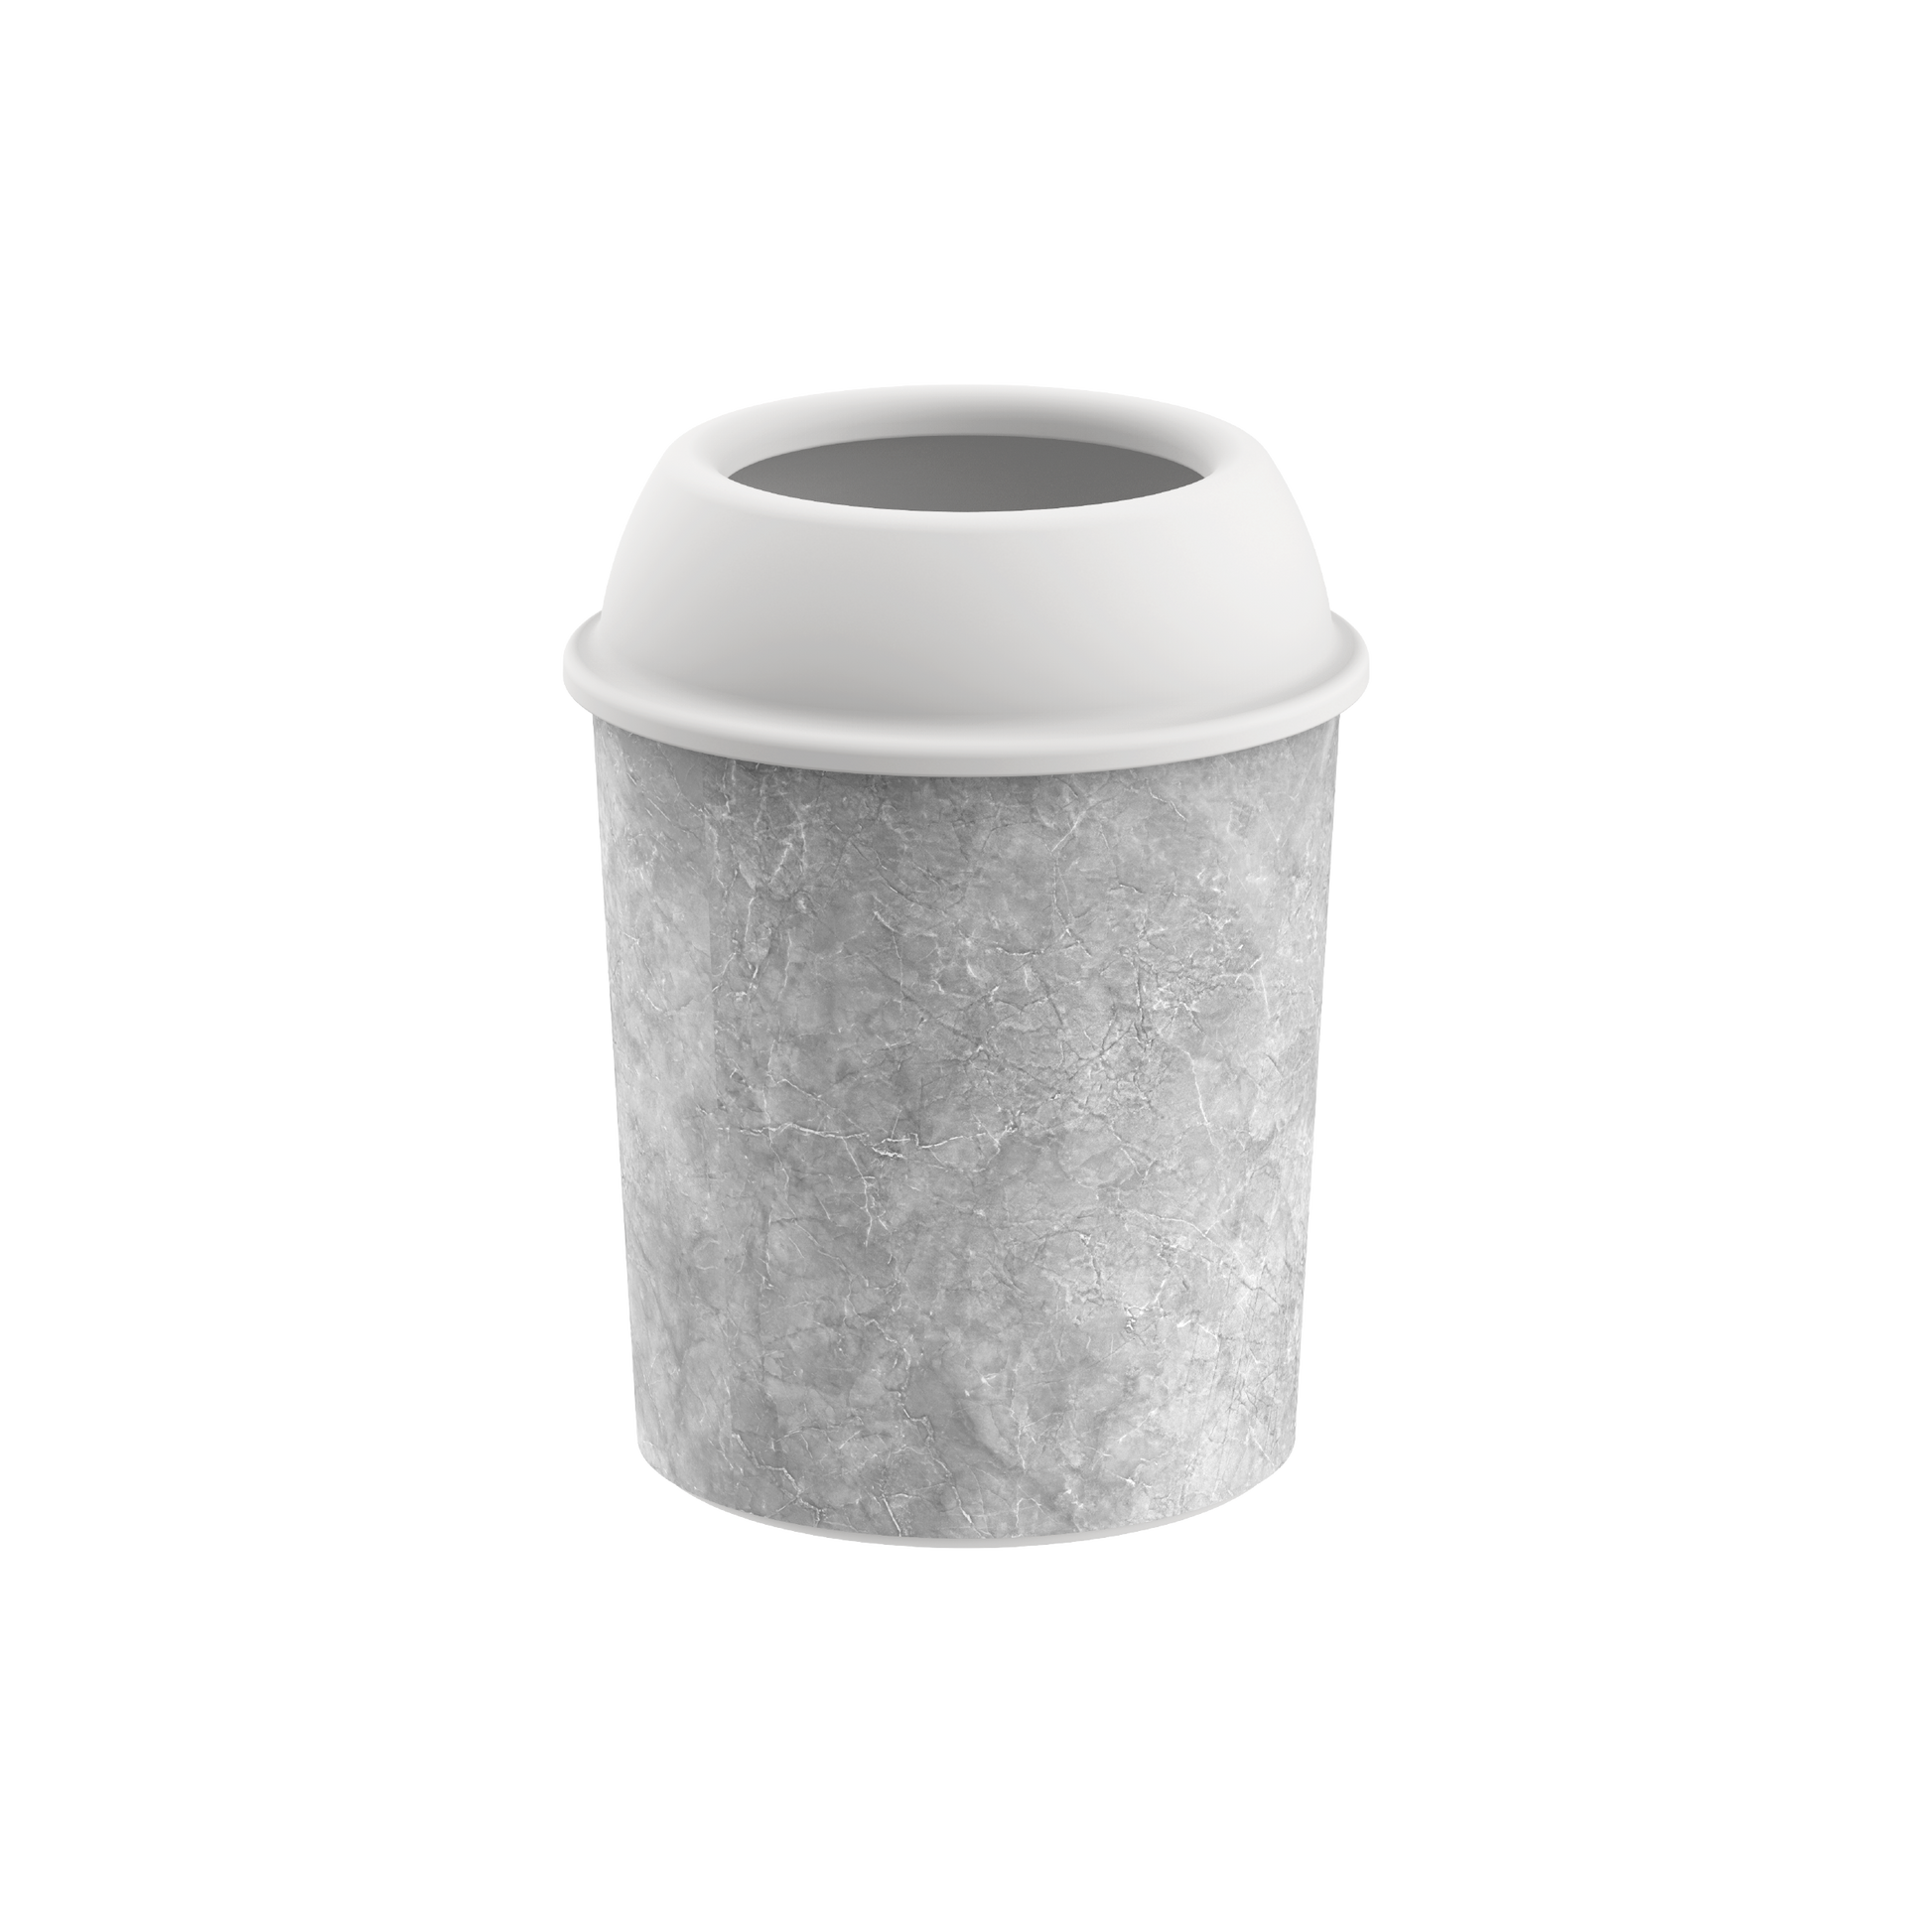 Ceramic 5L Round Dust Bin - Cosmoplast Qatar